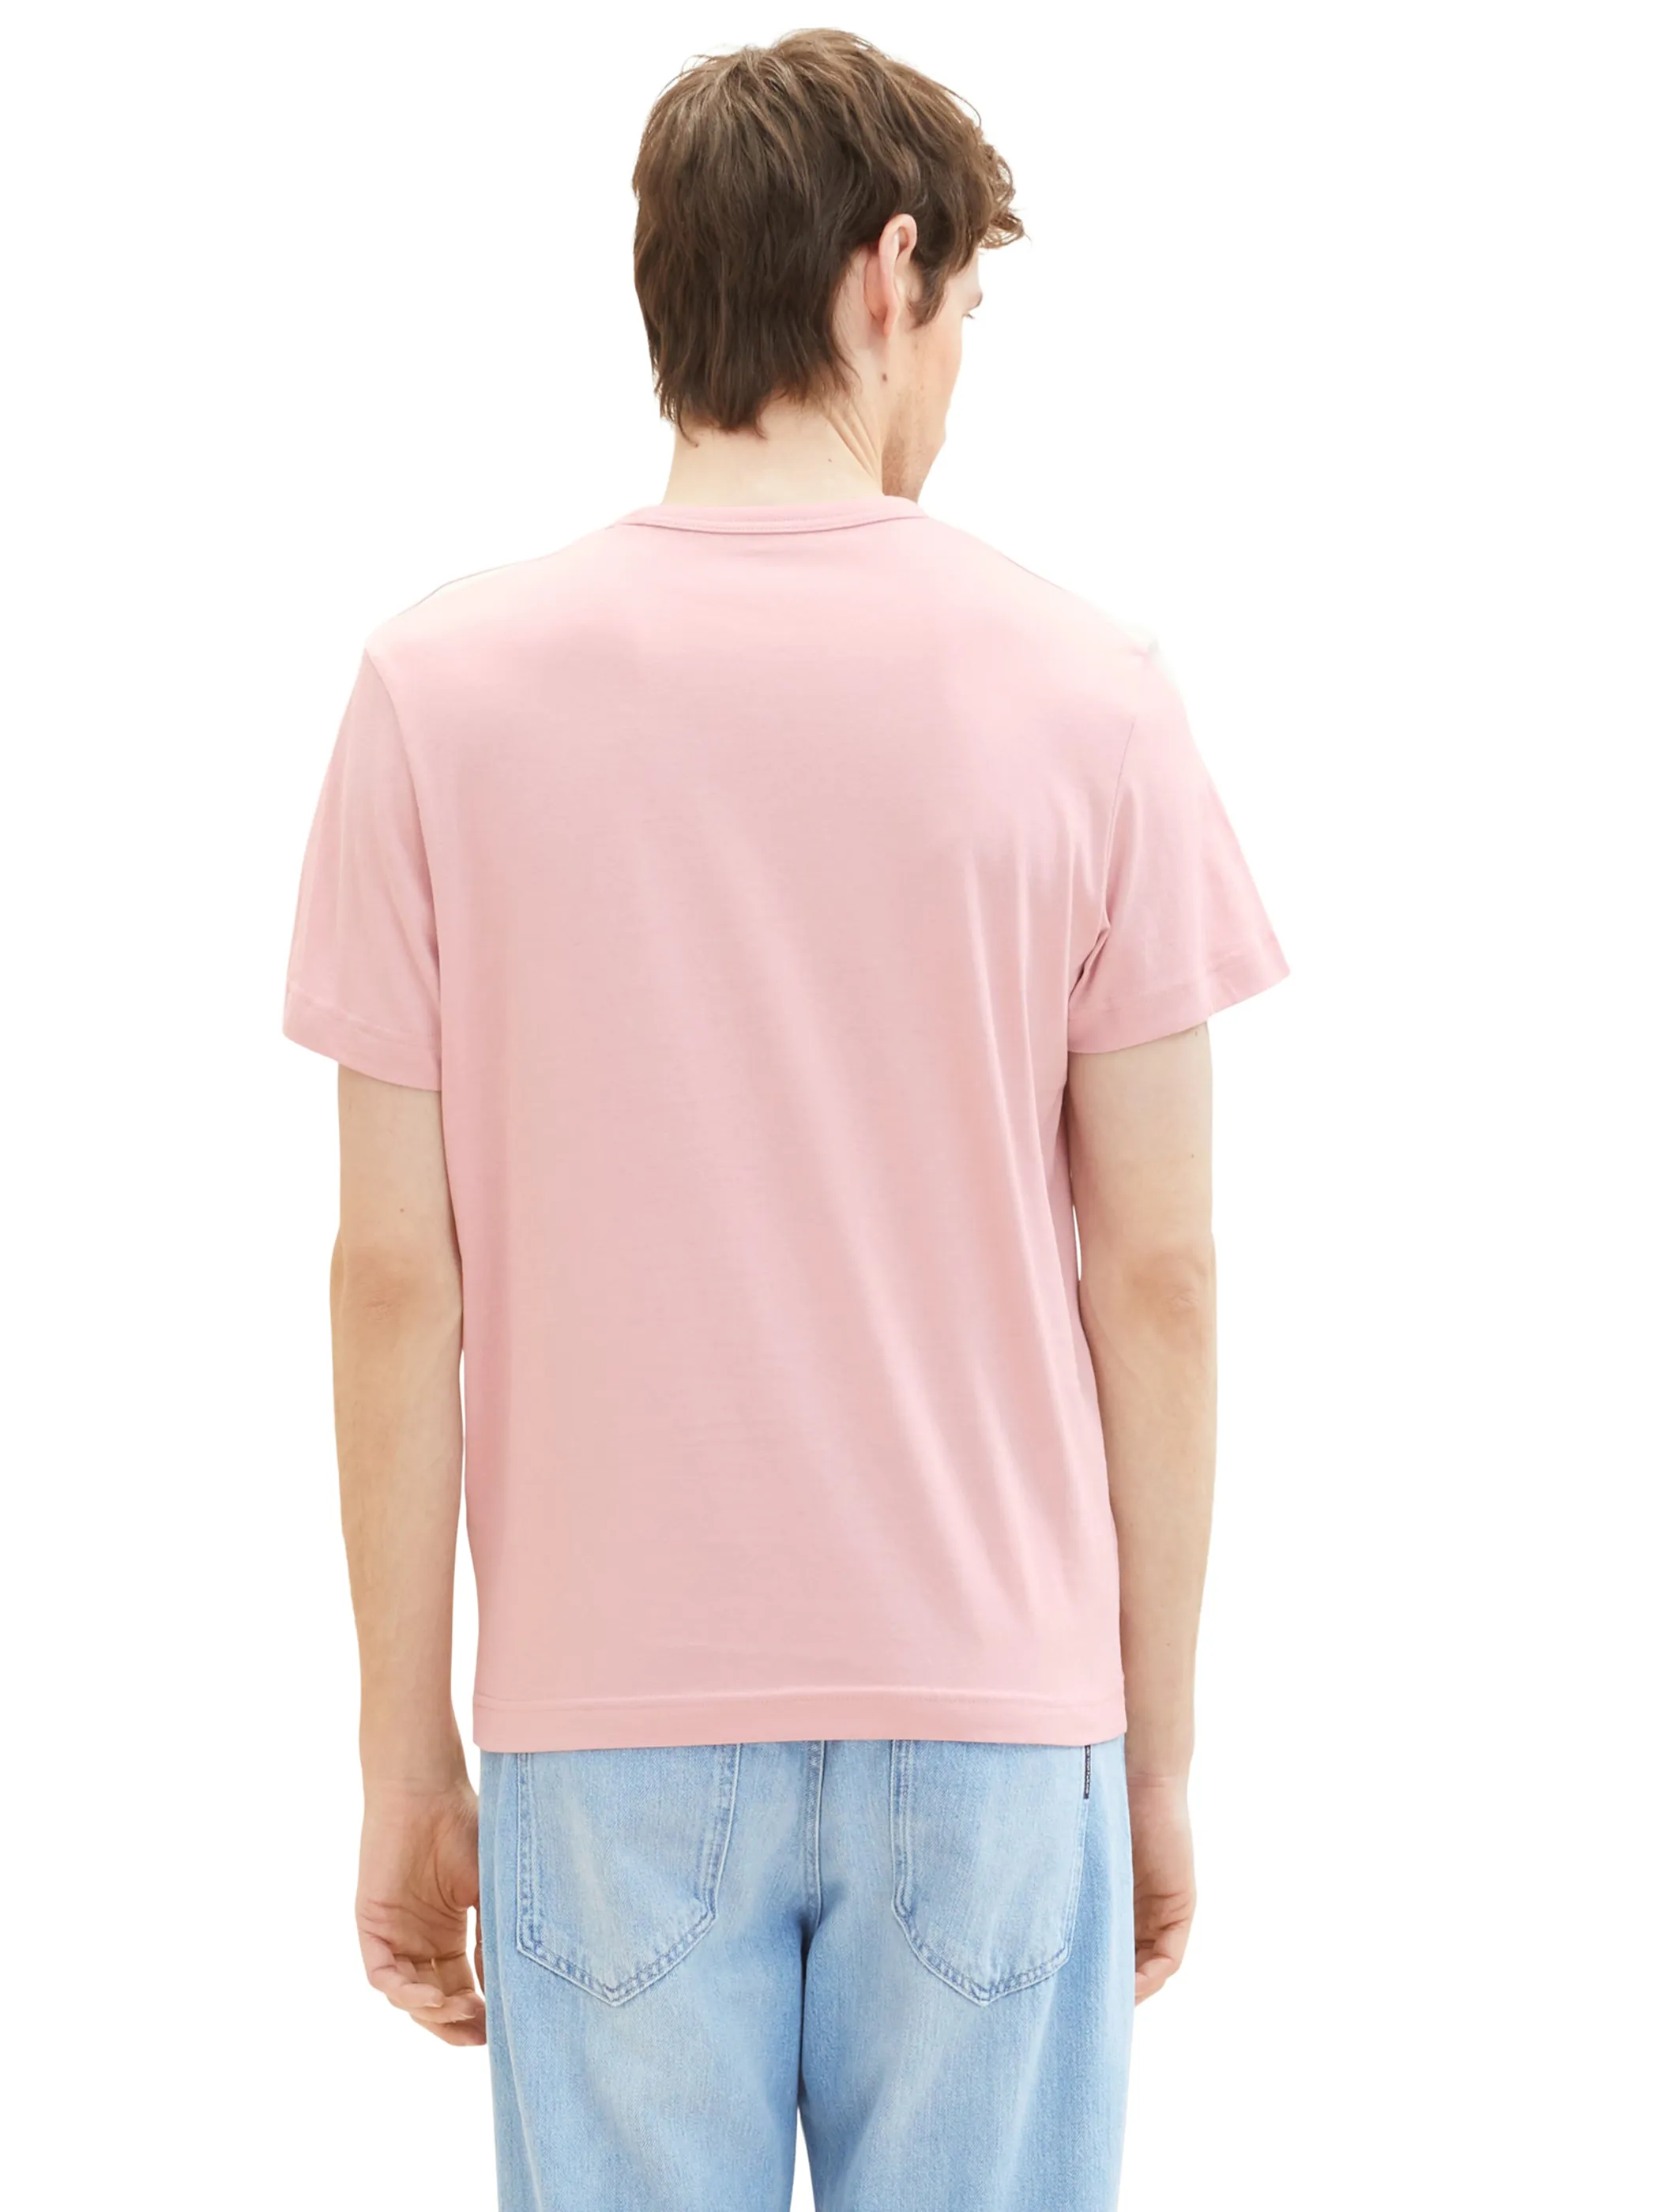 Tom Tailor 1036365 photoprint t-shirt Pink 880575 11055 2